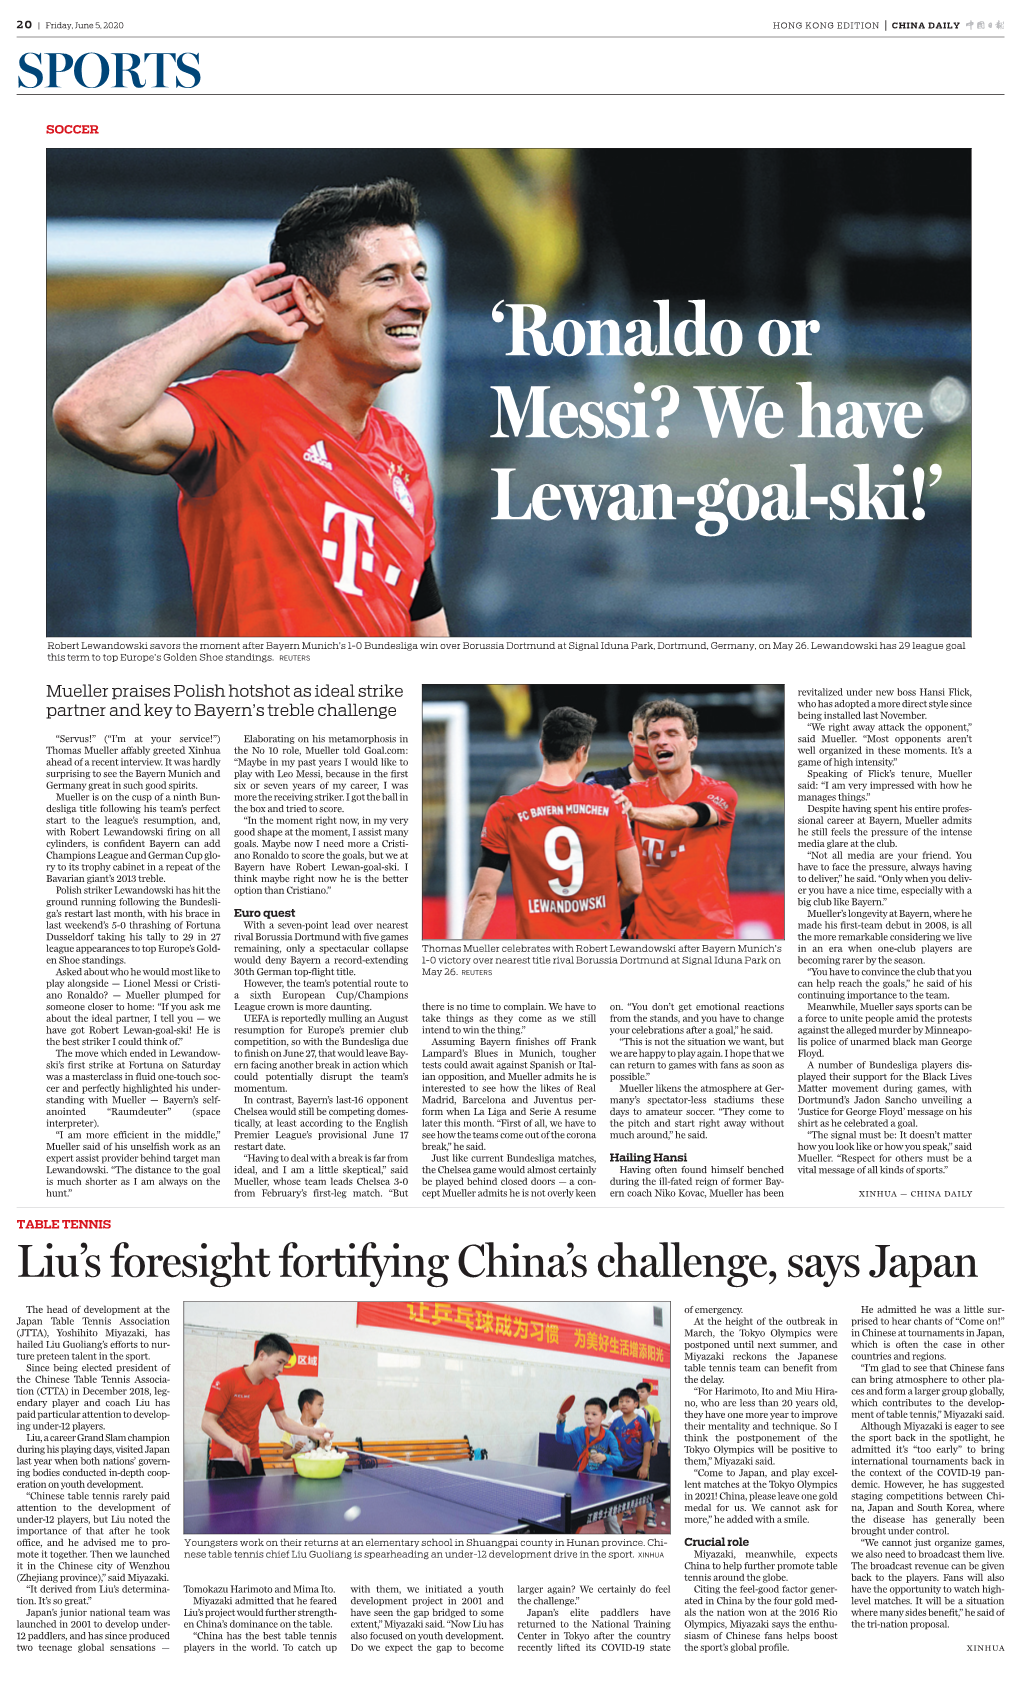 'Ronaldo Or Messi? We Have Lewangoalski!'